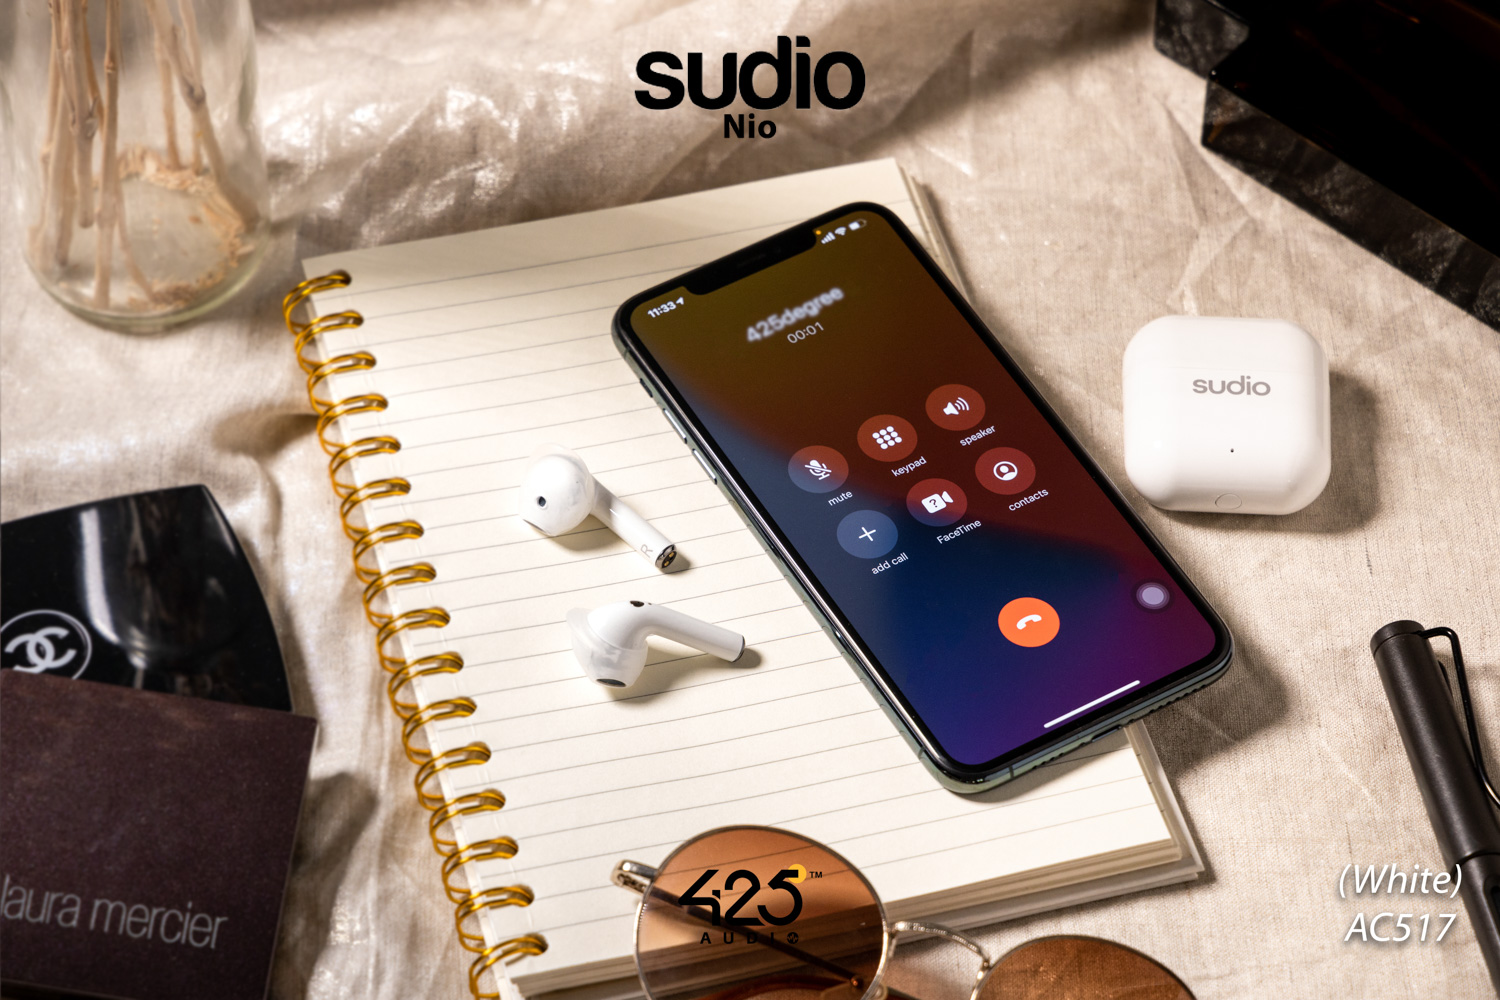 sudio nio,true wireless,earbud,bluetooth 5.0,adaptive dual-mic,คุยโทรศัพท์ชัด,white,black,green,ipx4,หูฟังไร้สาย,คุยโทรศัพท์ชัด